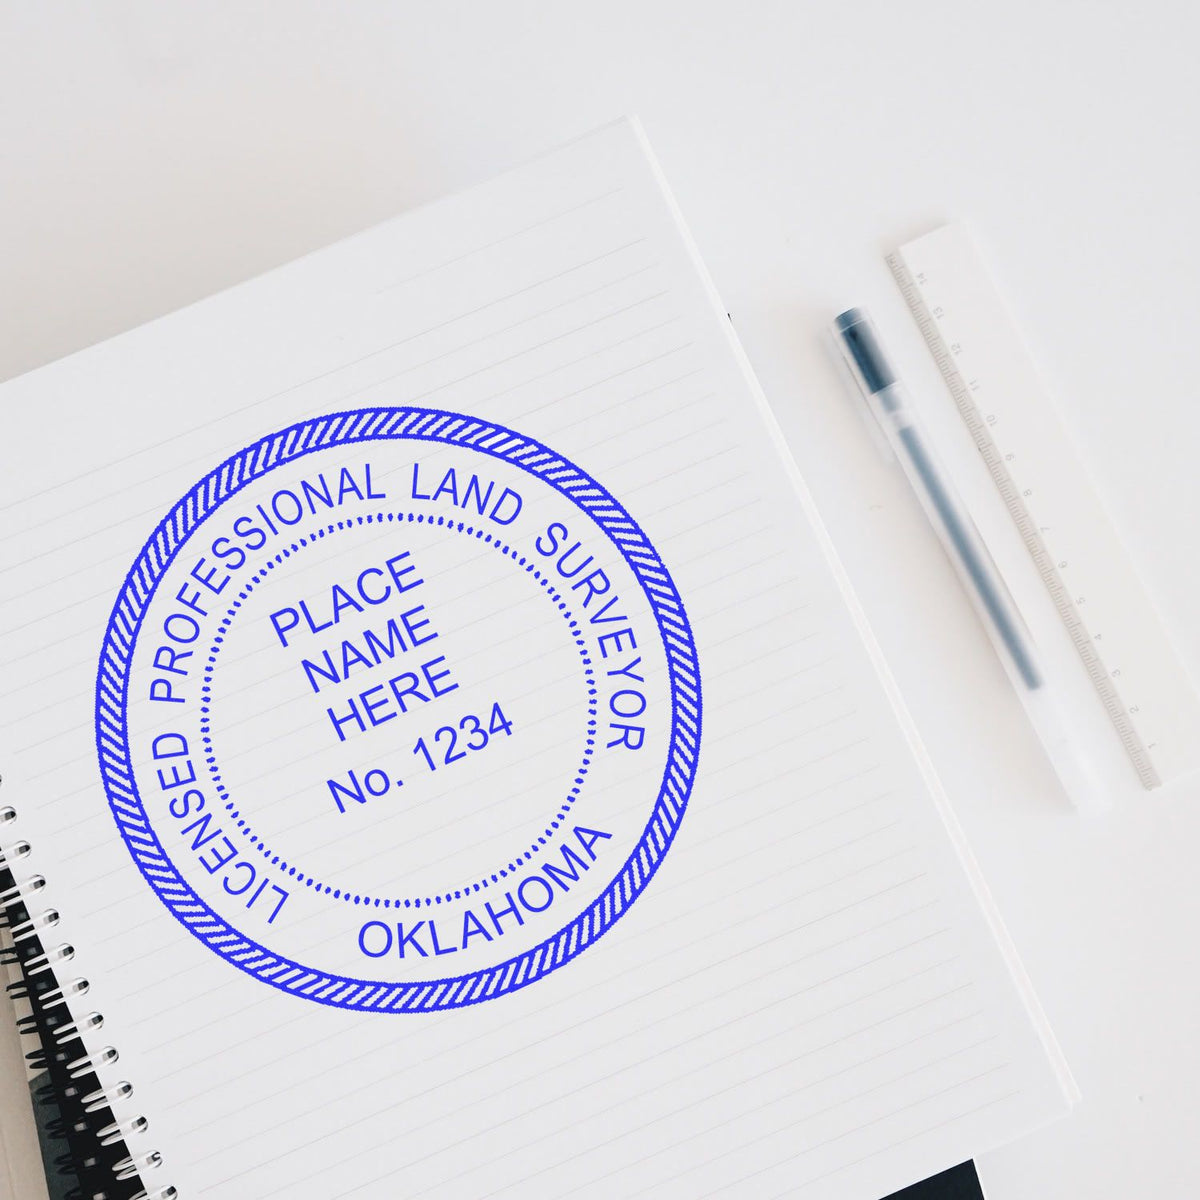 Oklahoma Land Surveyor Seal Stamp In Use Photo